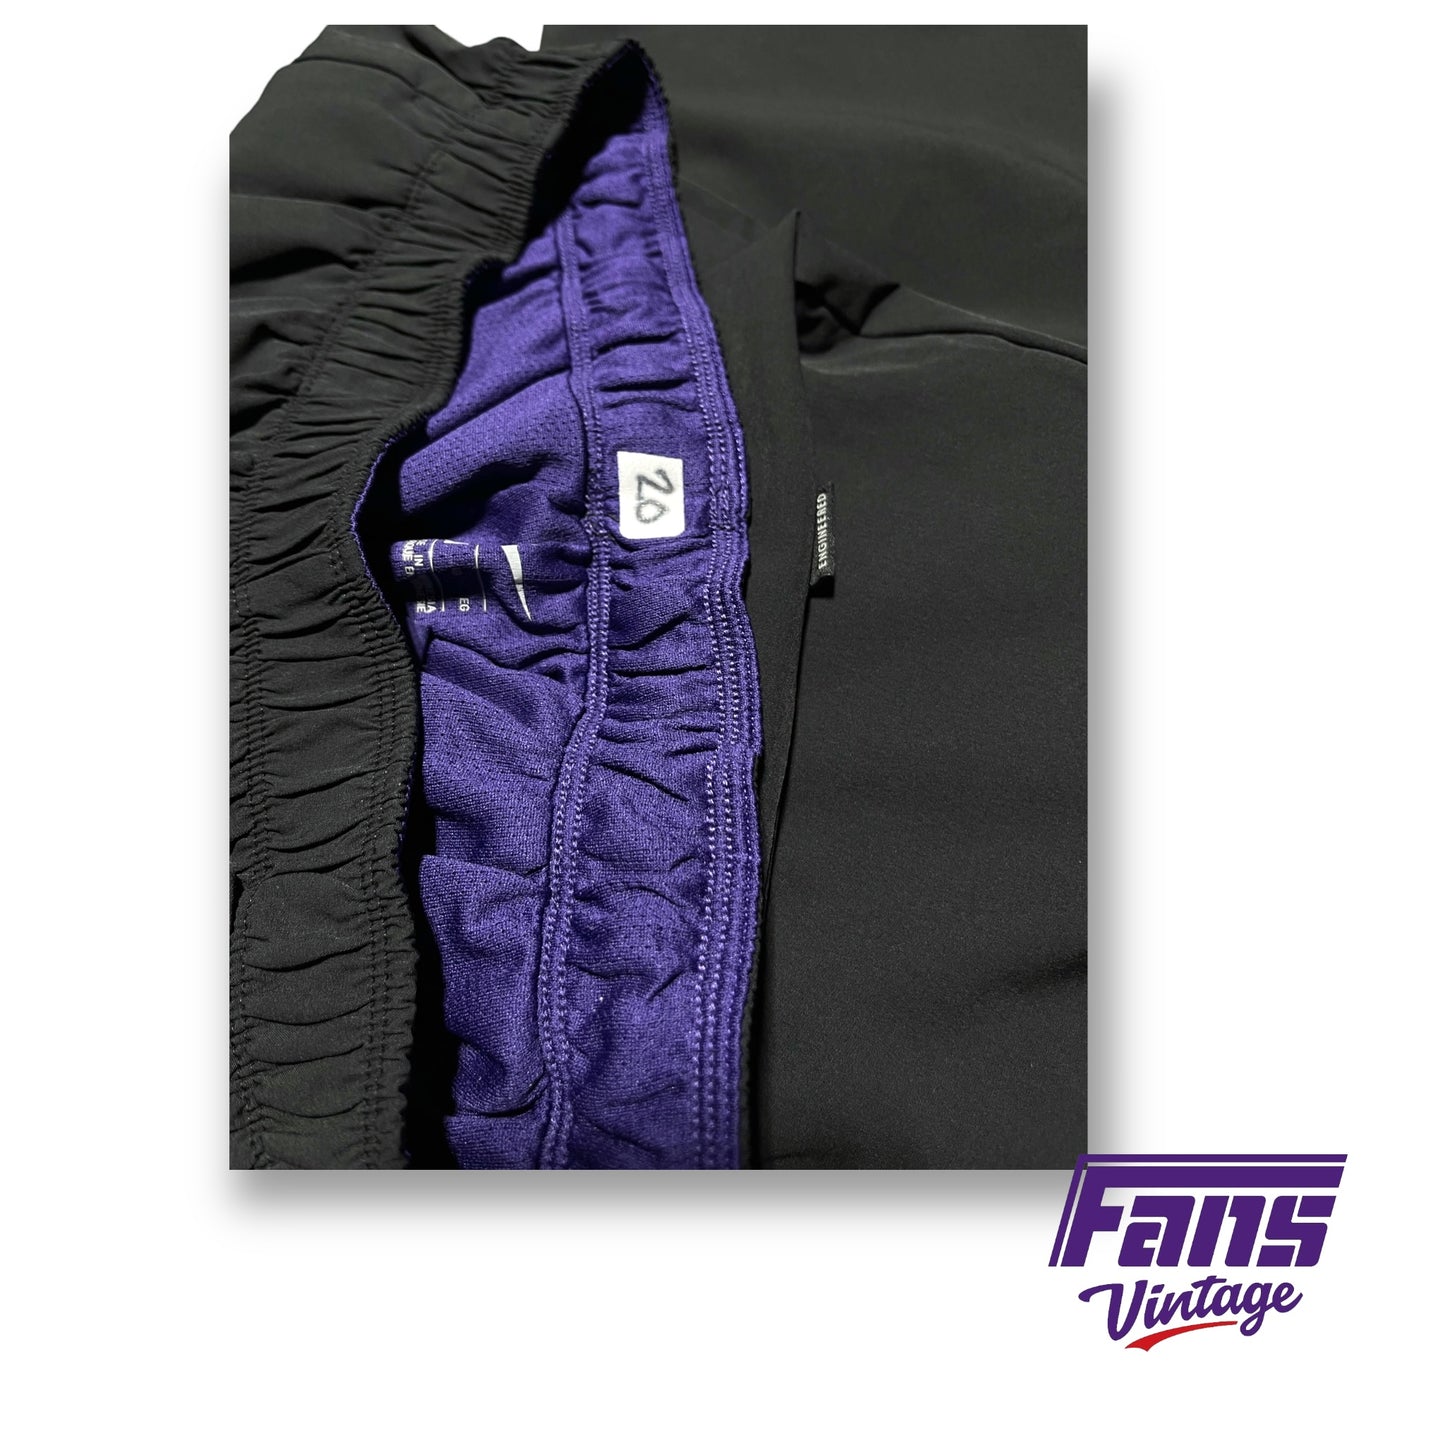 TCU Baseball Premium Nike Travel Set -“On Field” Edition Jacket and Pants